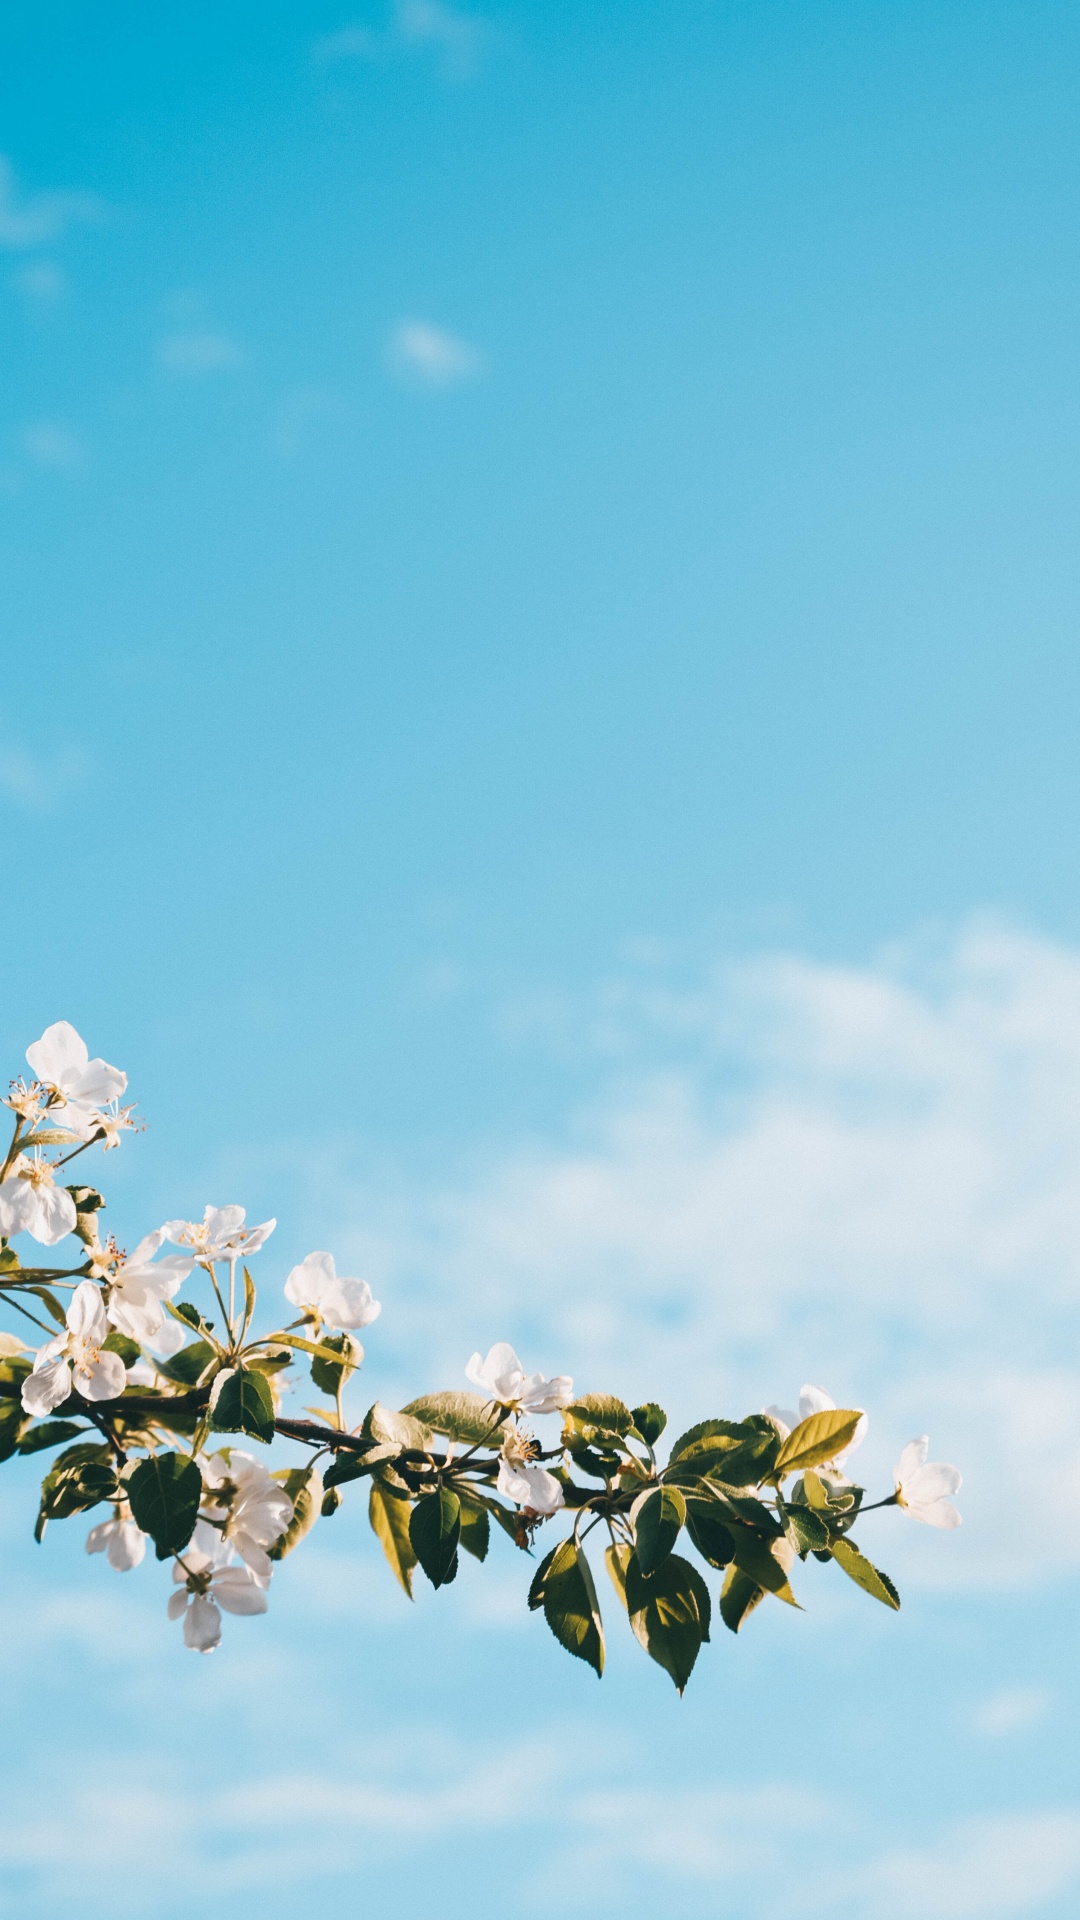 White Cherry Blossom Under Blue Sky During Daytime. Wallpaper in 1080x1920 Resolution